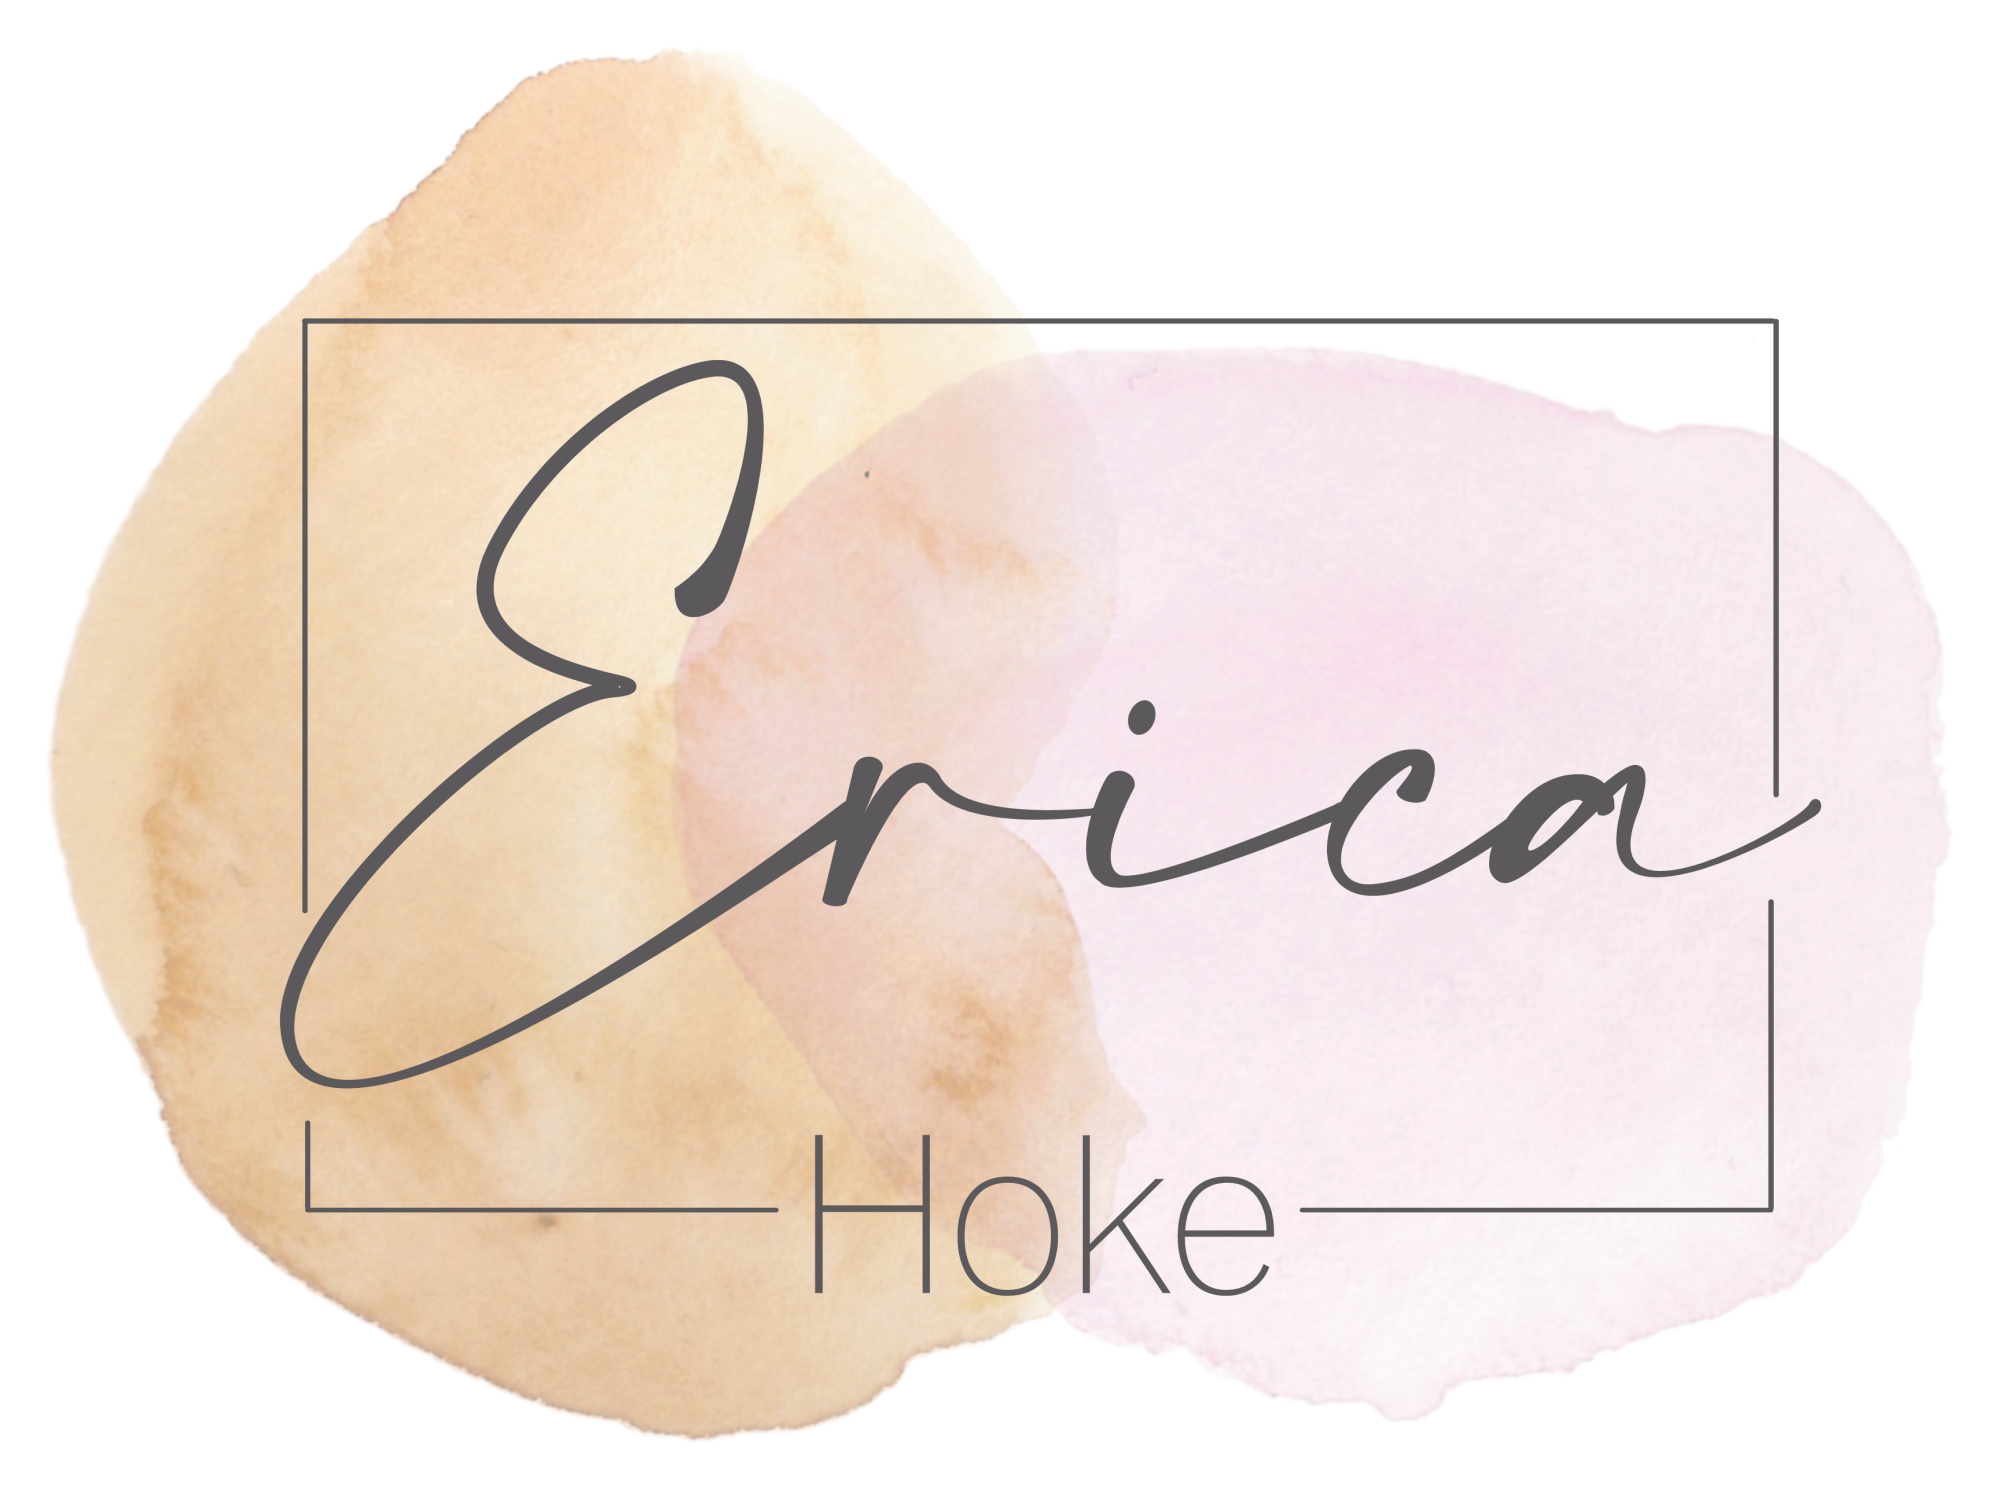 Erica Hoke